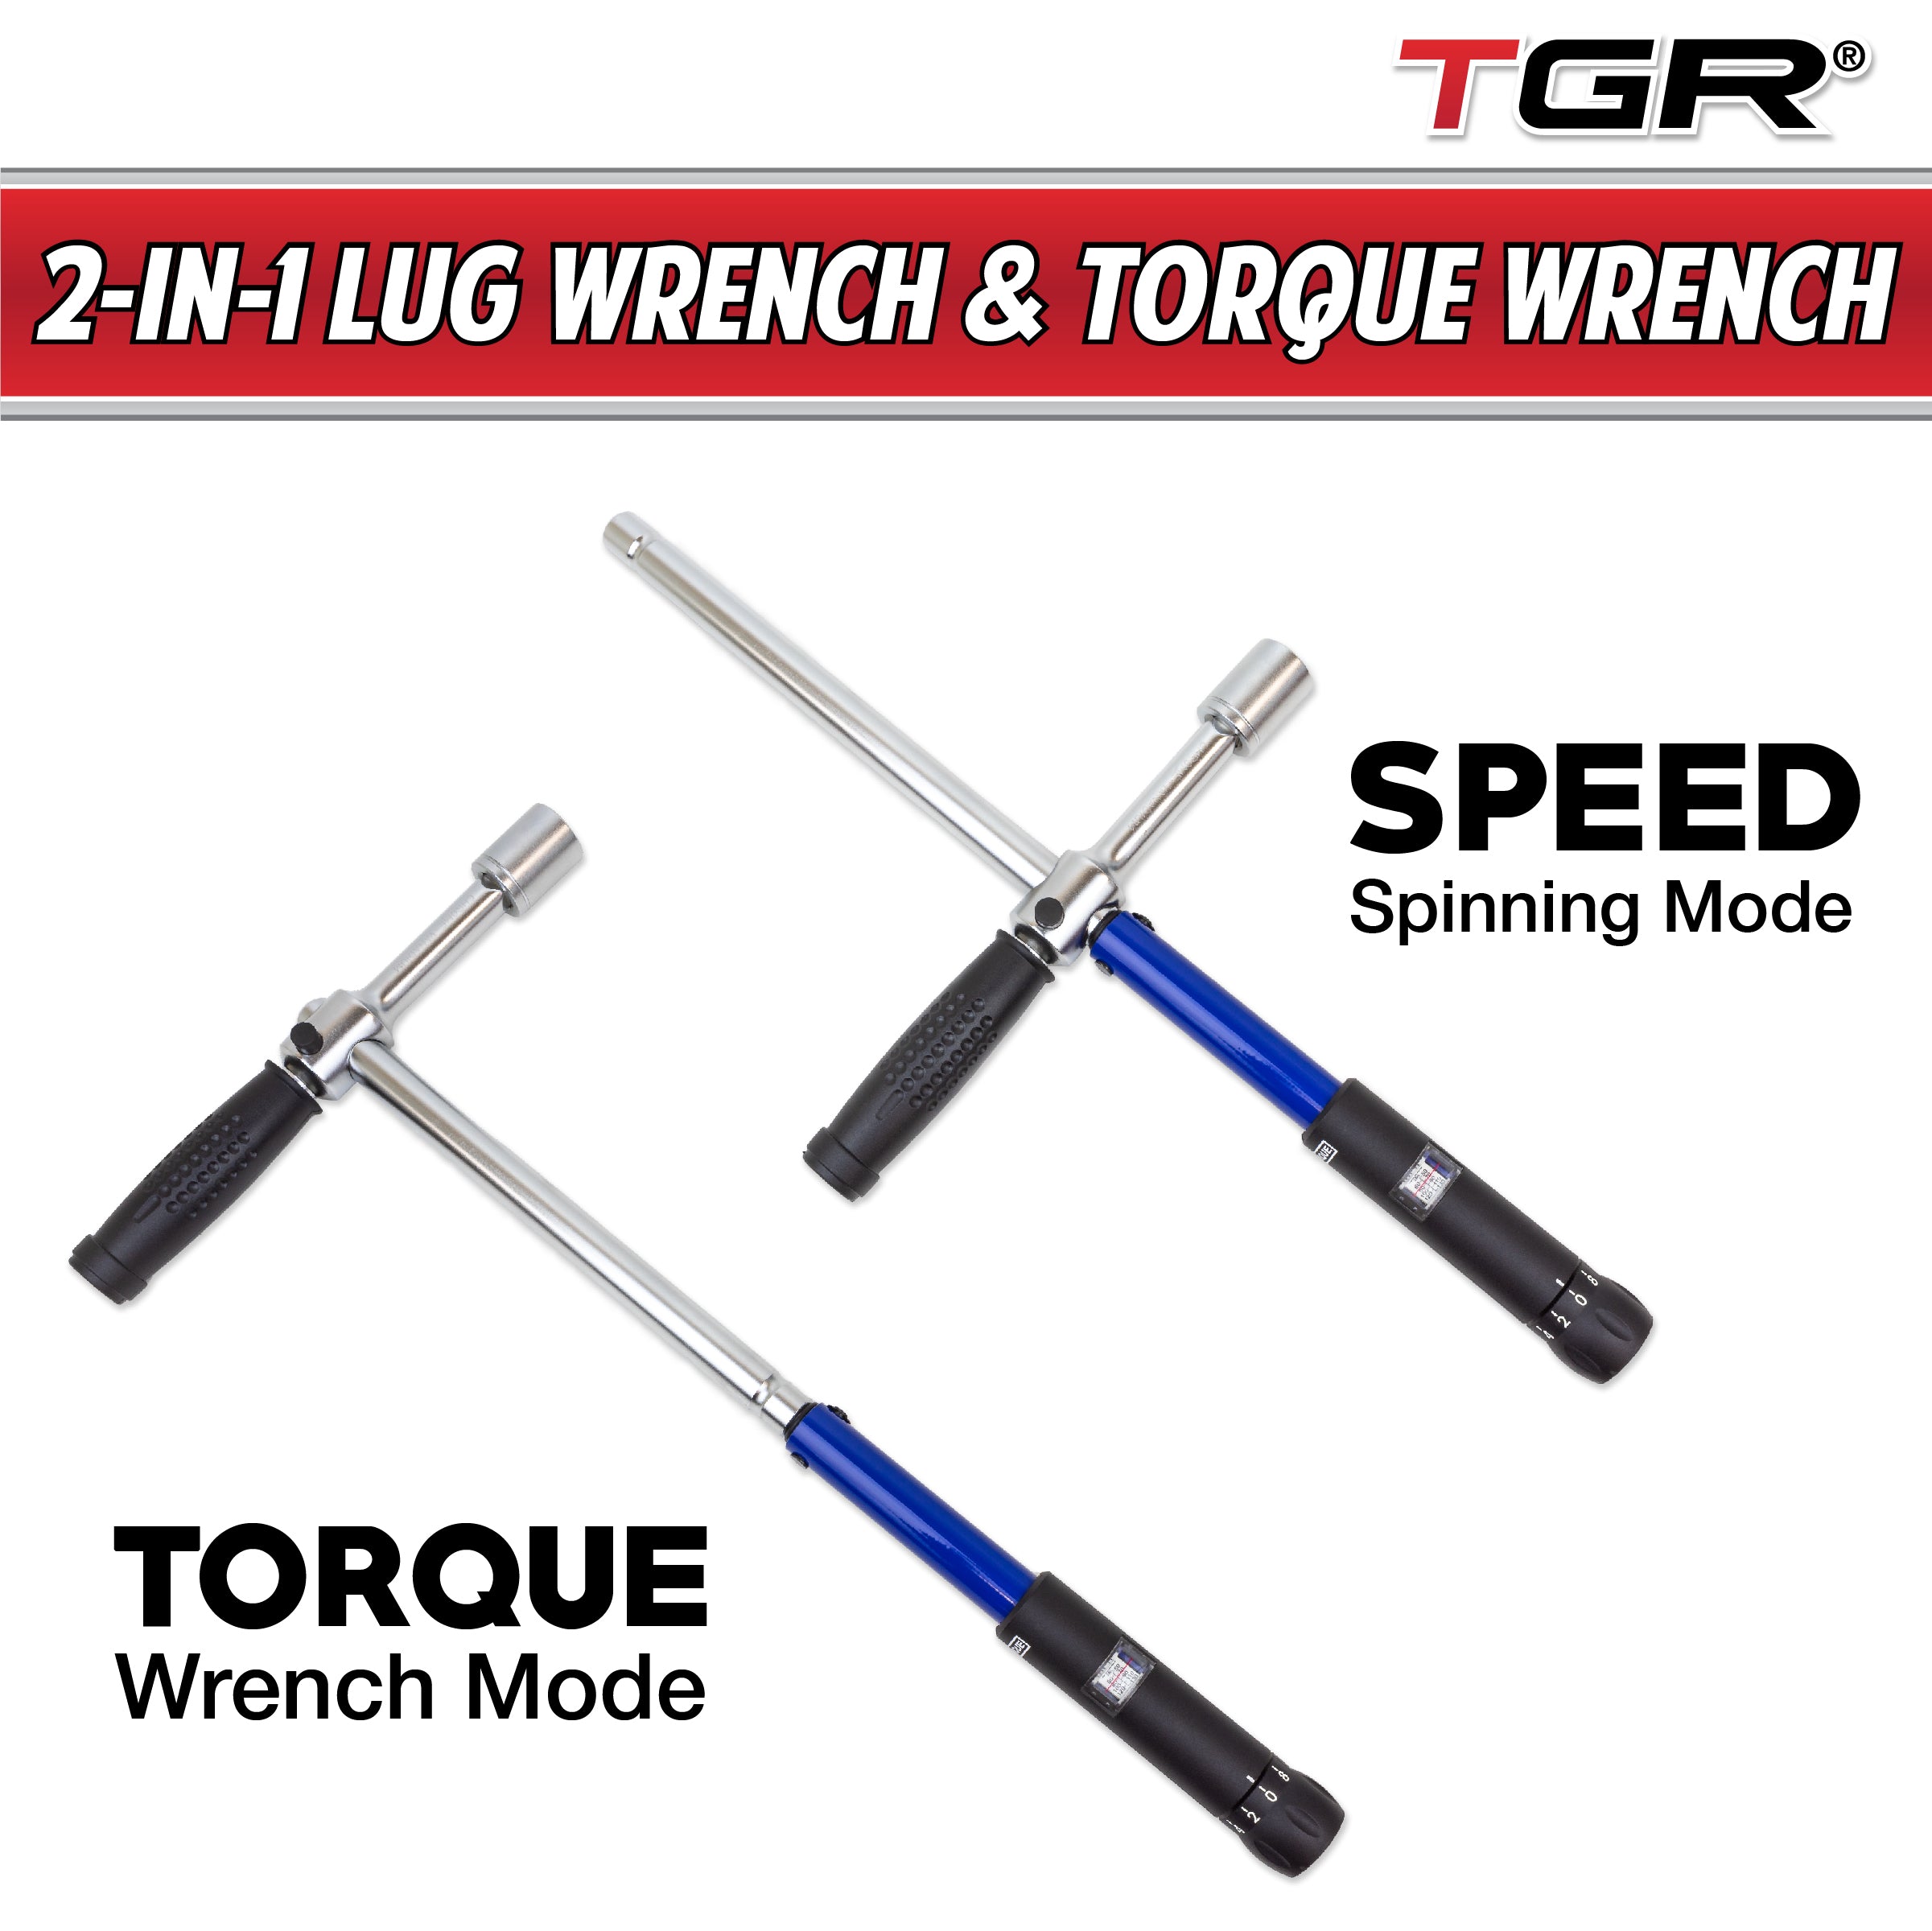 TGR 1/2” Dr Cross Type Lug Nut Torque Wrench 70-170 NM Micro-Adjustment (17, 19, 21 mm Sockets)